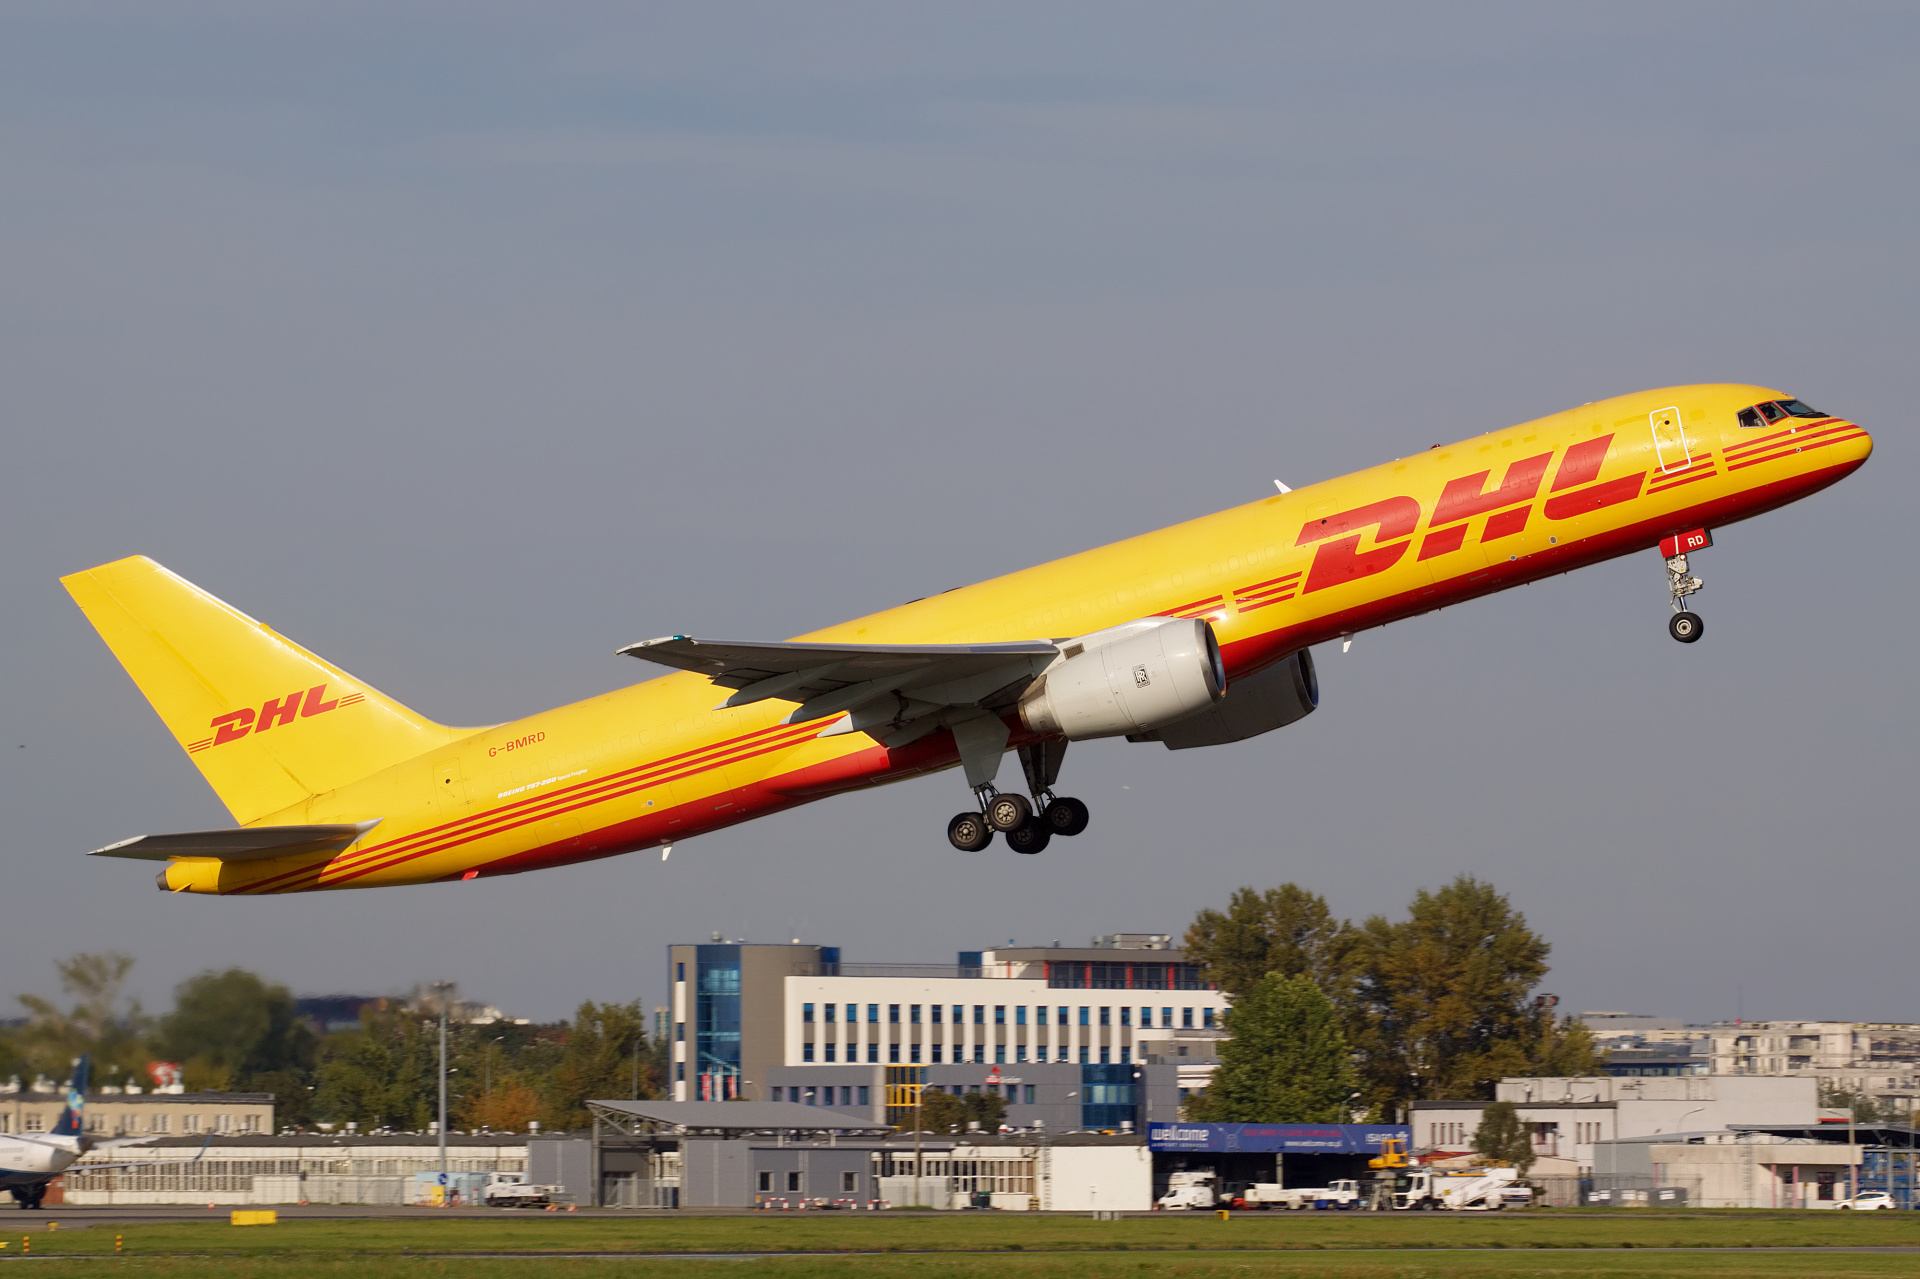 SF, G-BMRD, European Air Transport (Aircraft » EPWA Spotting » Boeing 757-200F » DHL)